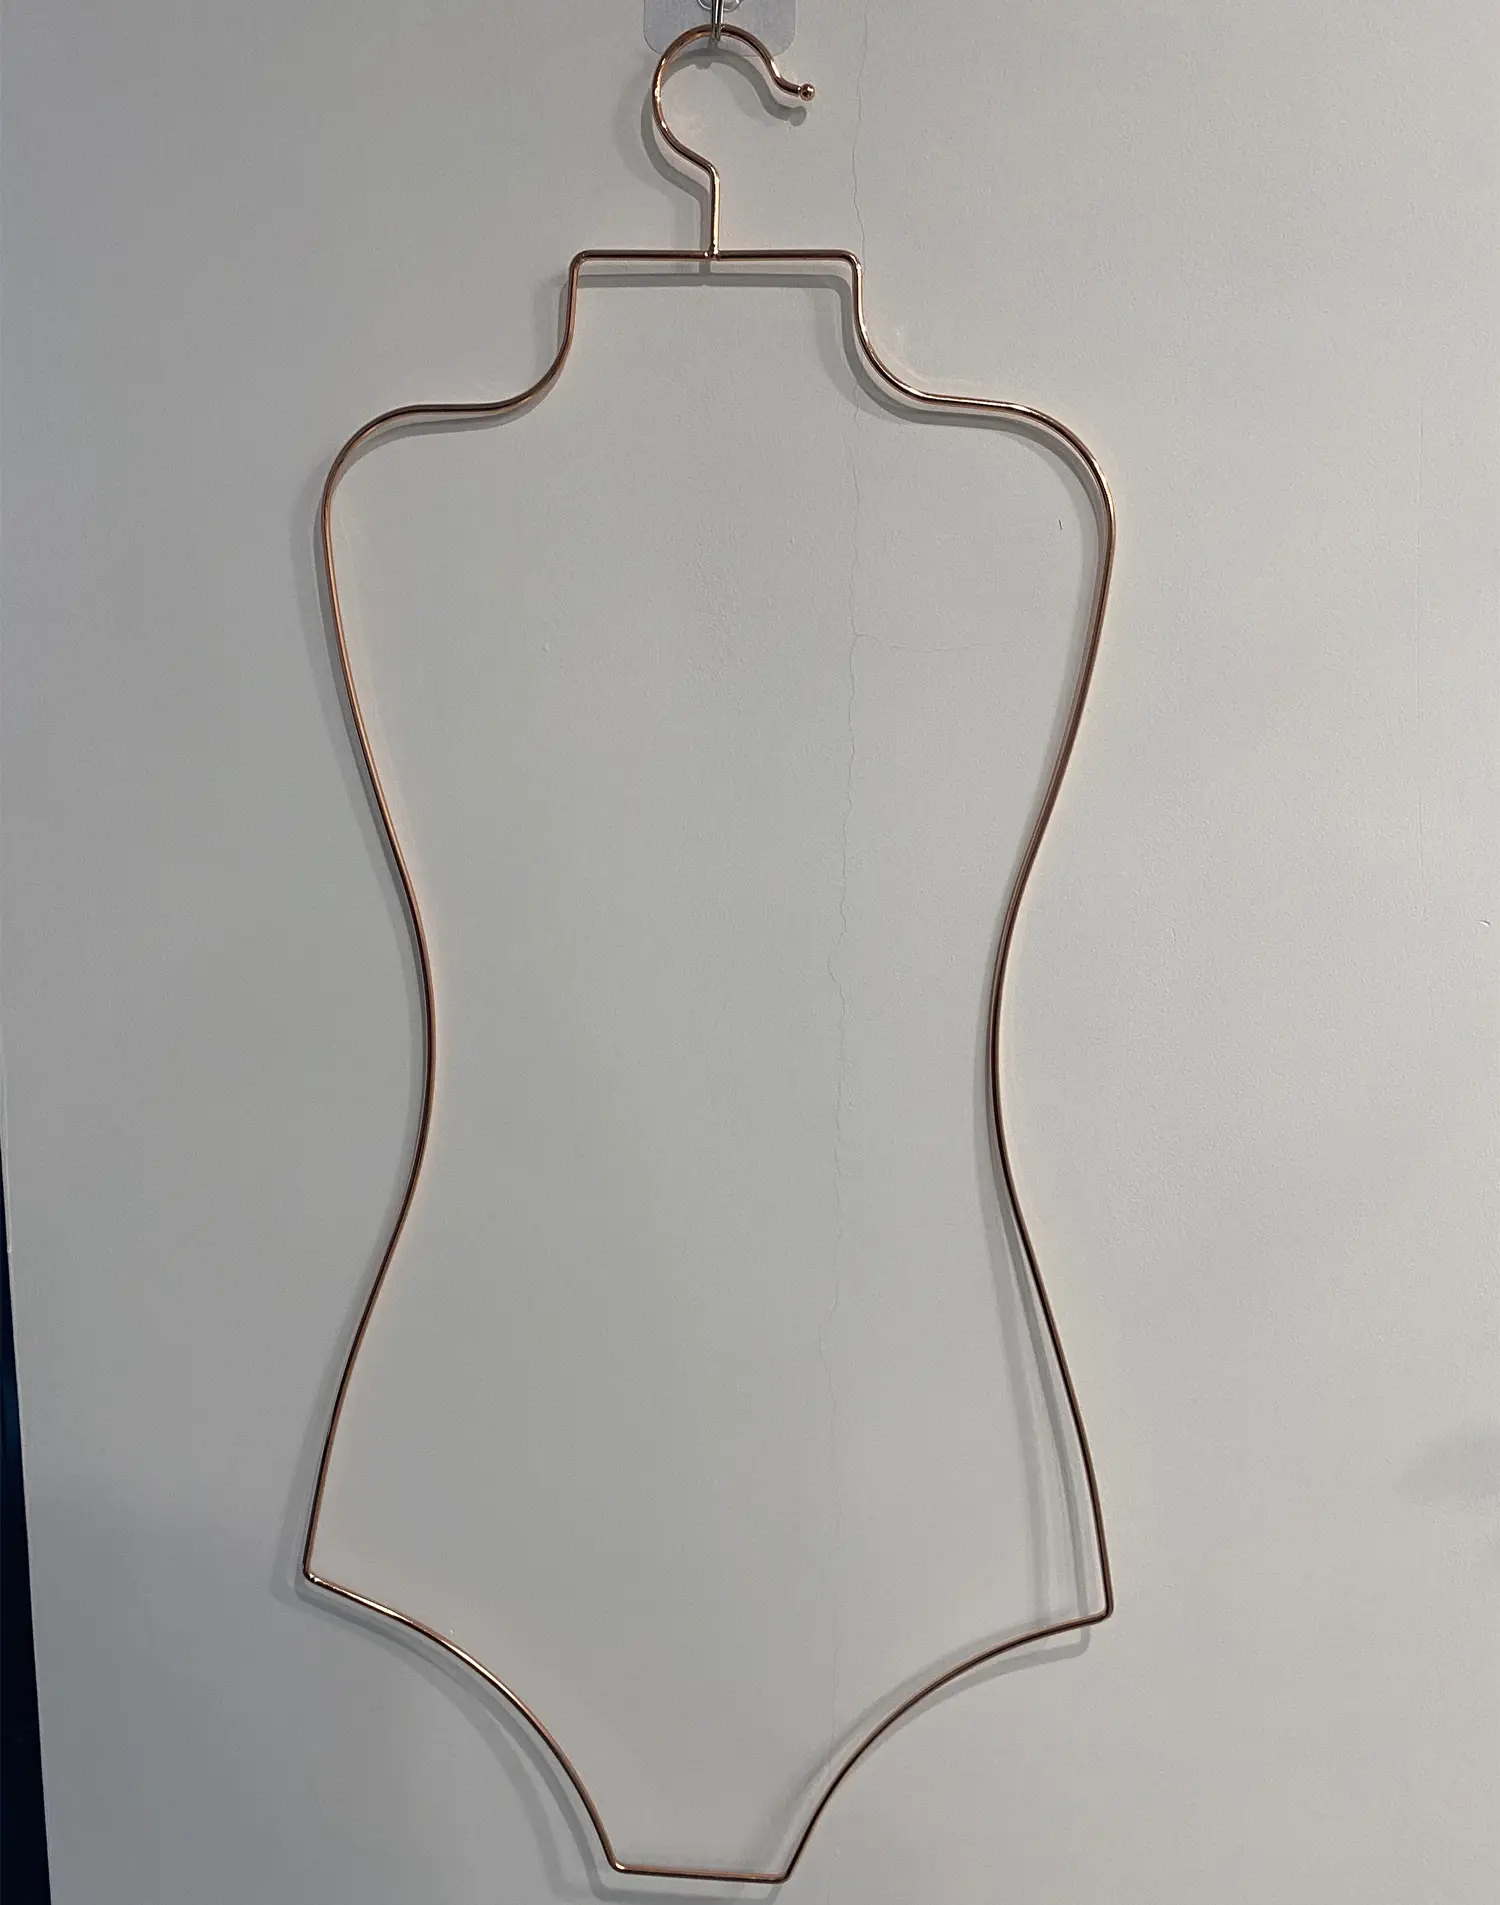 Hohe Qualität Volle Körper Form Schwarz Edelstahl Metall Draht Display Bikini Bademode Aufhänger